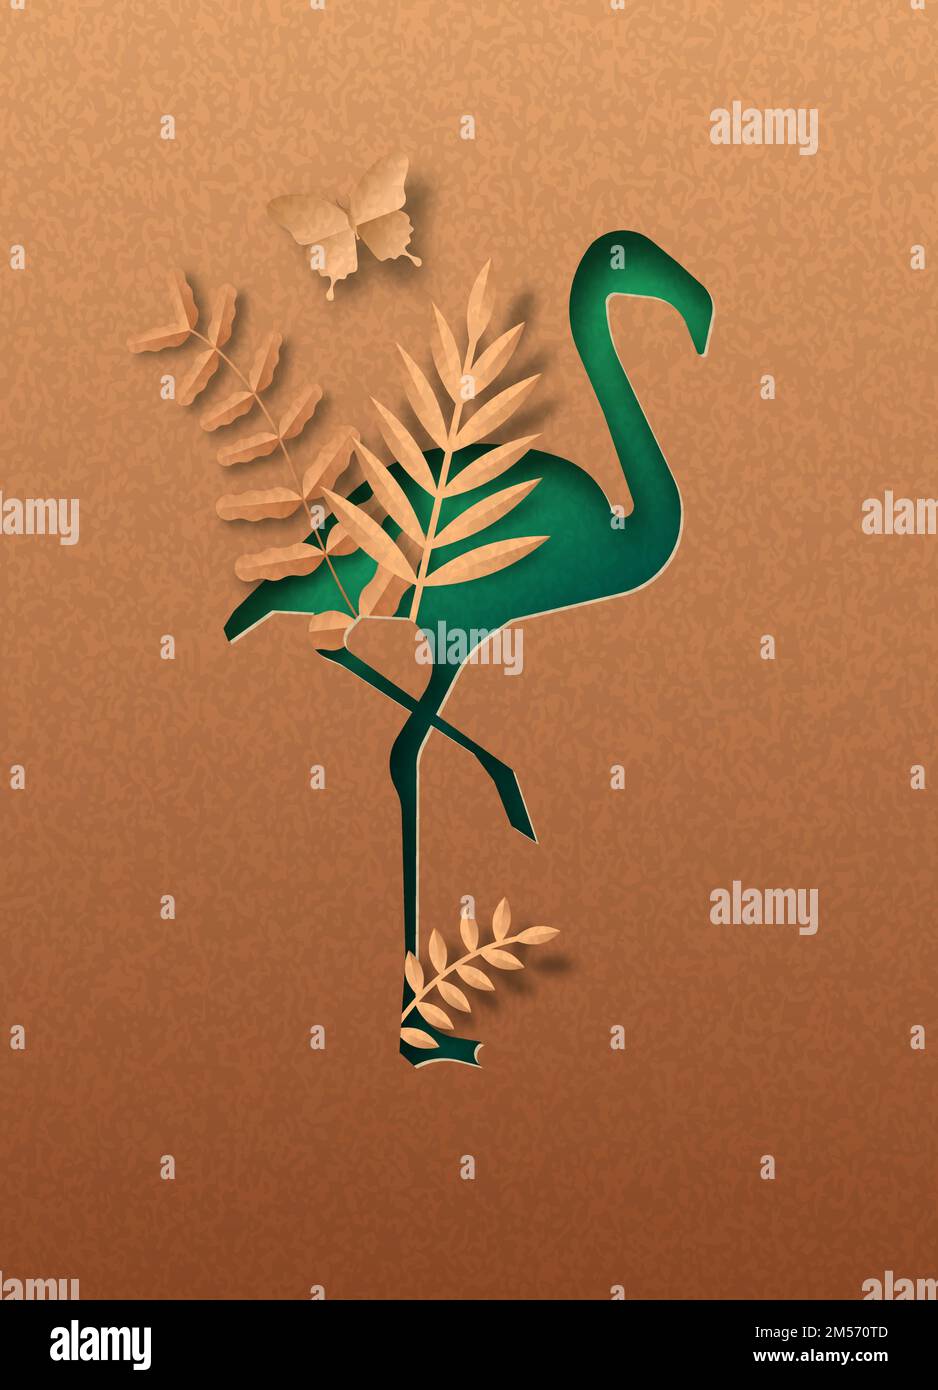 Grüner Flamingo Vogel isoliert papercut Silhouette mit tropischen Pflanzenblatt innen. Recycling Papier Textur Ausschnitt Konzept für afrika Safari, Wildtiere Co Stock Vektor